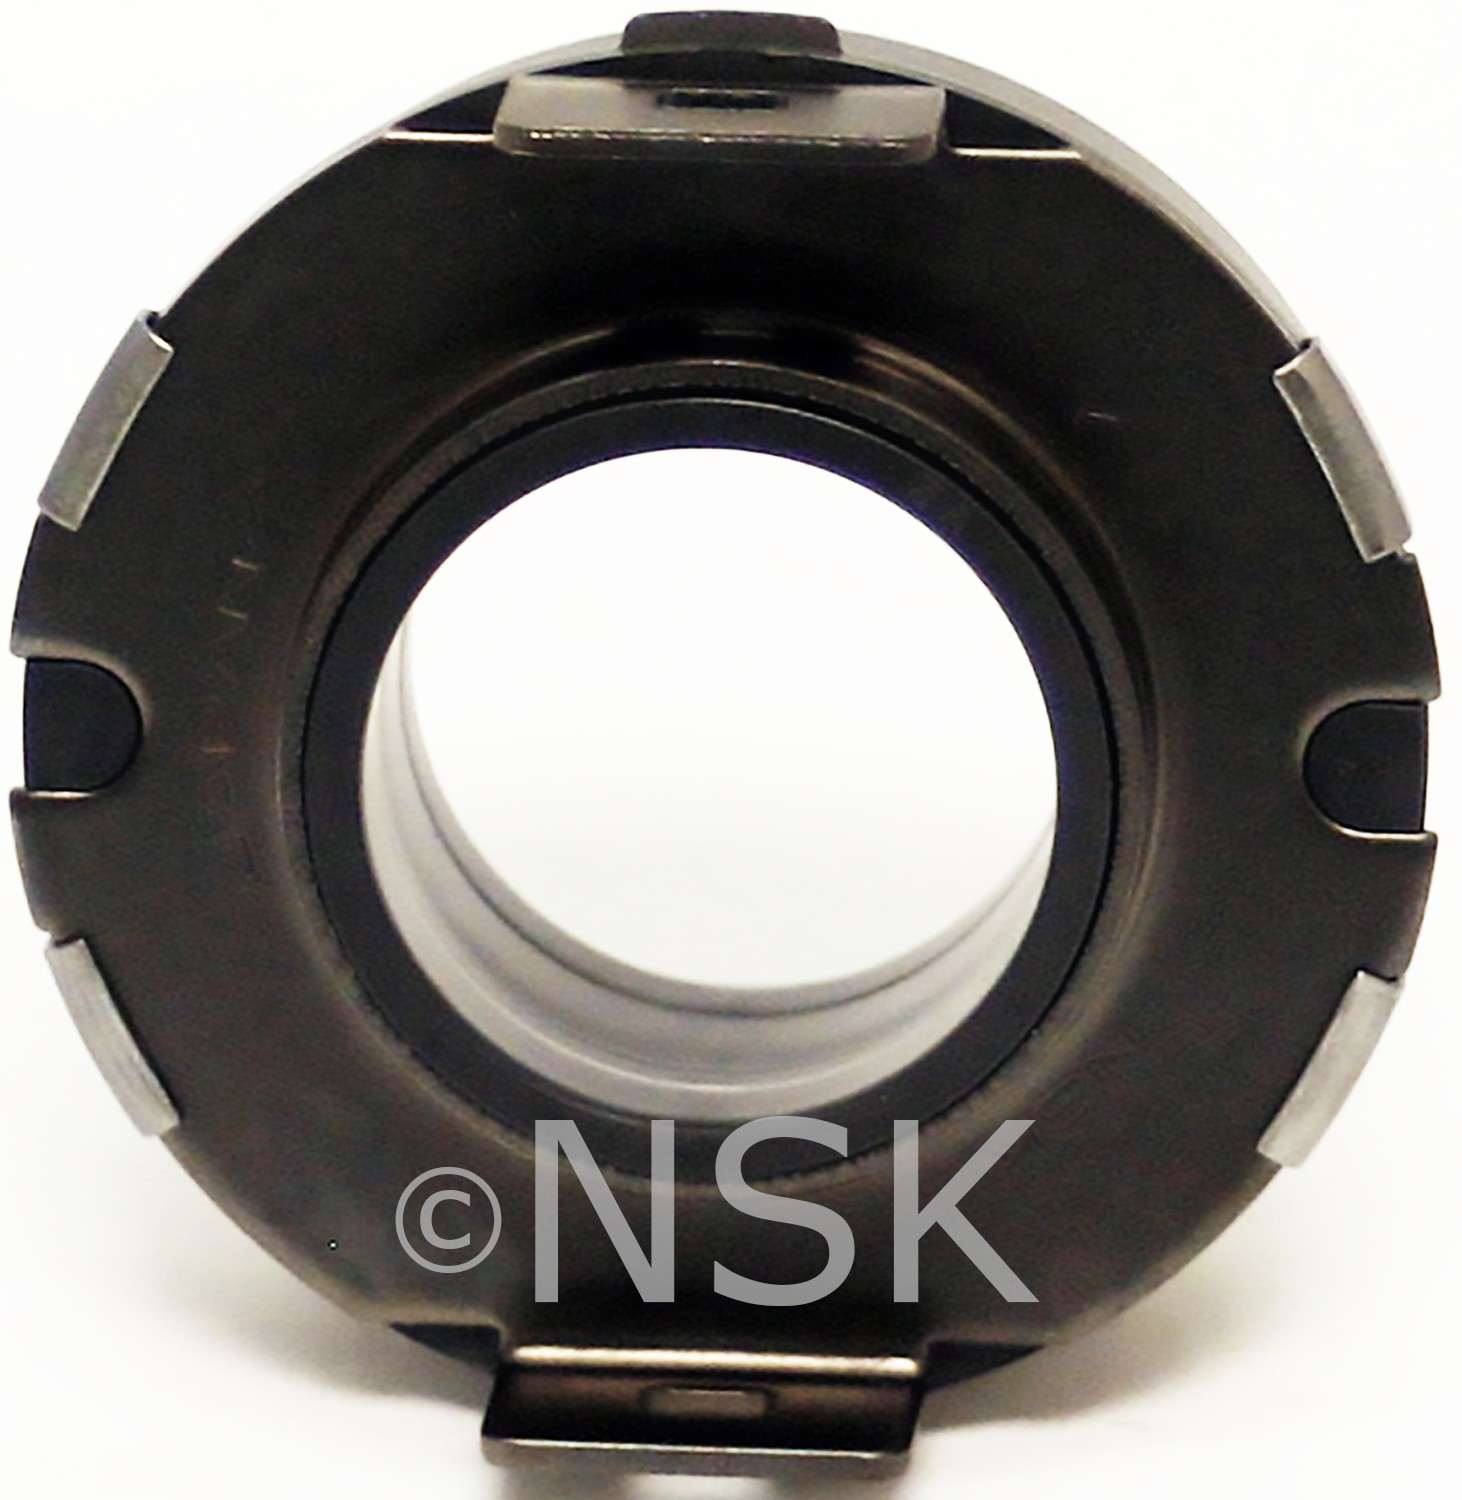 nsk clutch release bearing  frsport 48tkt3202